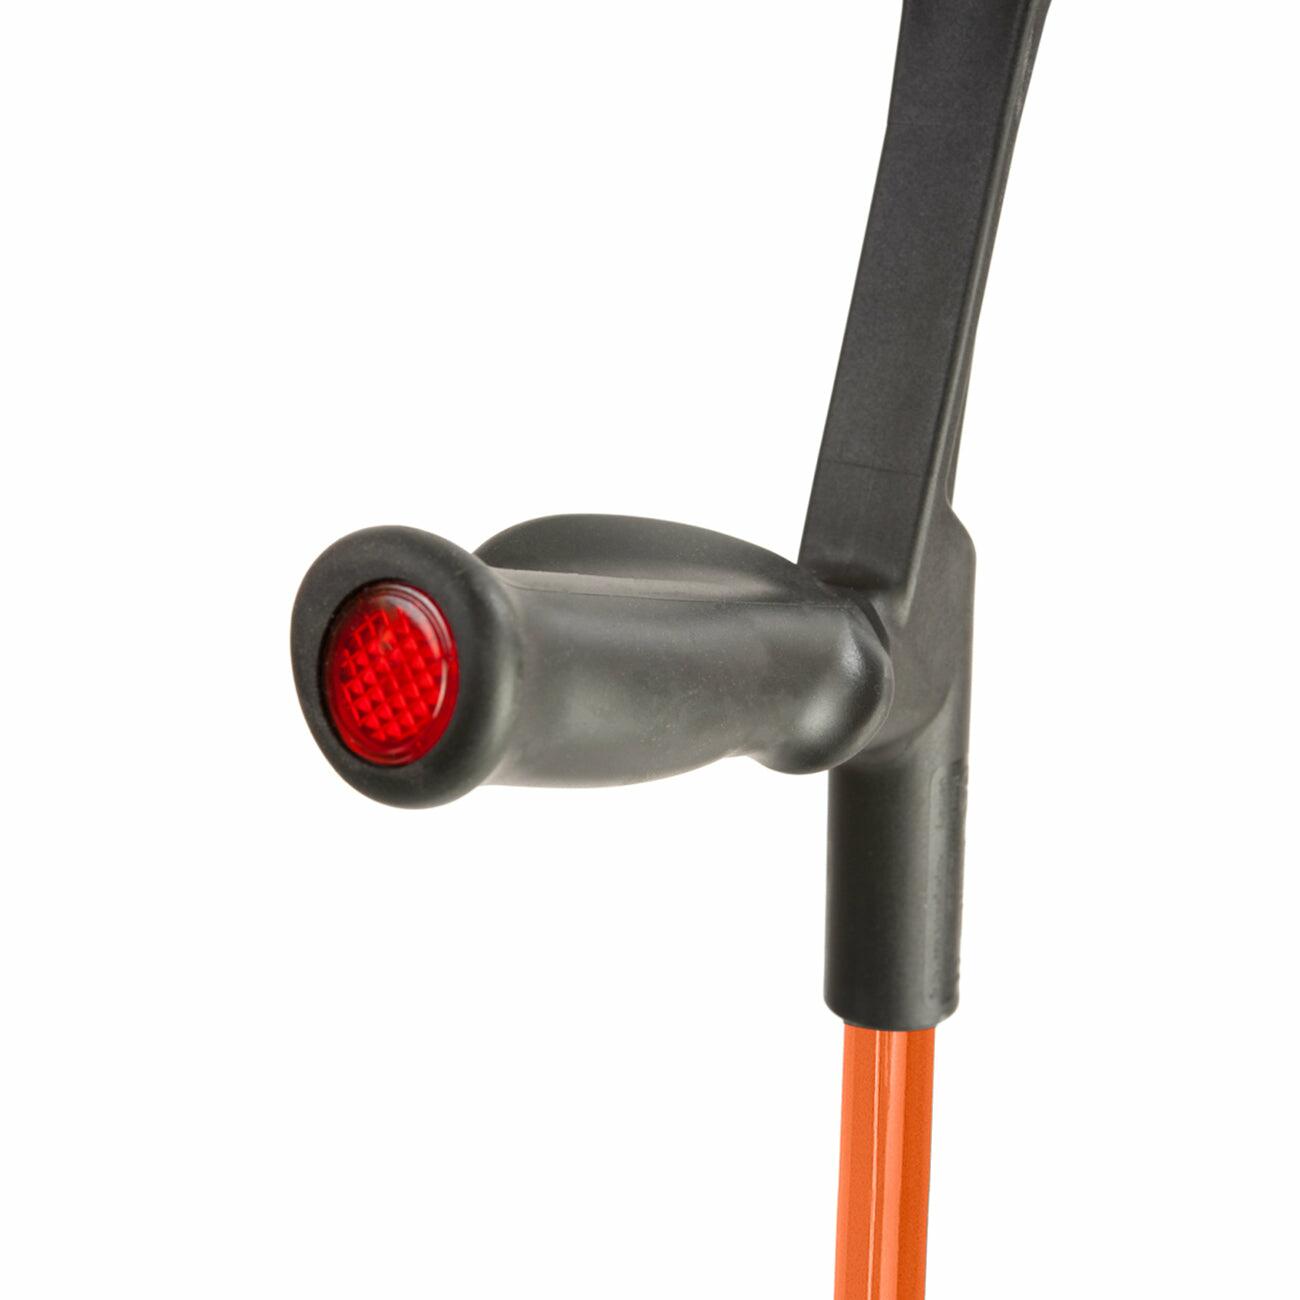 Comfort grip handle of an orange Flexyfoot Comfort Grip Open Cuff Crutch